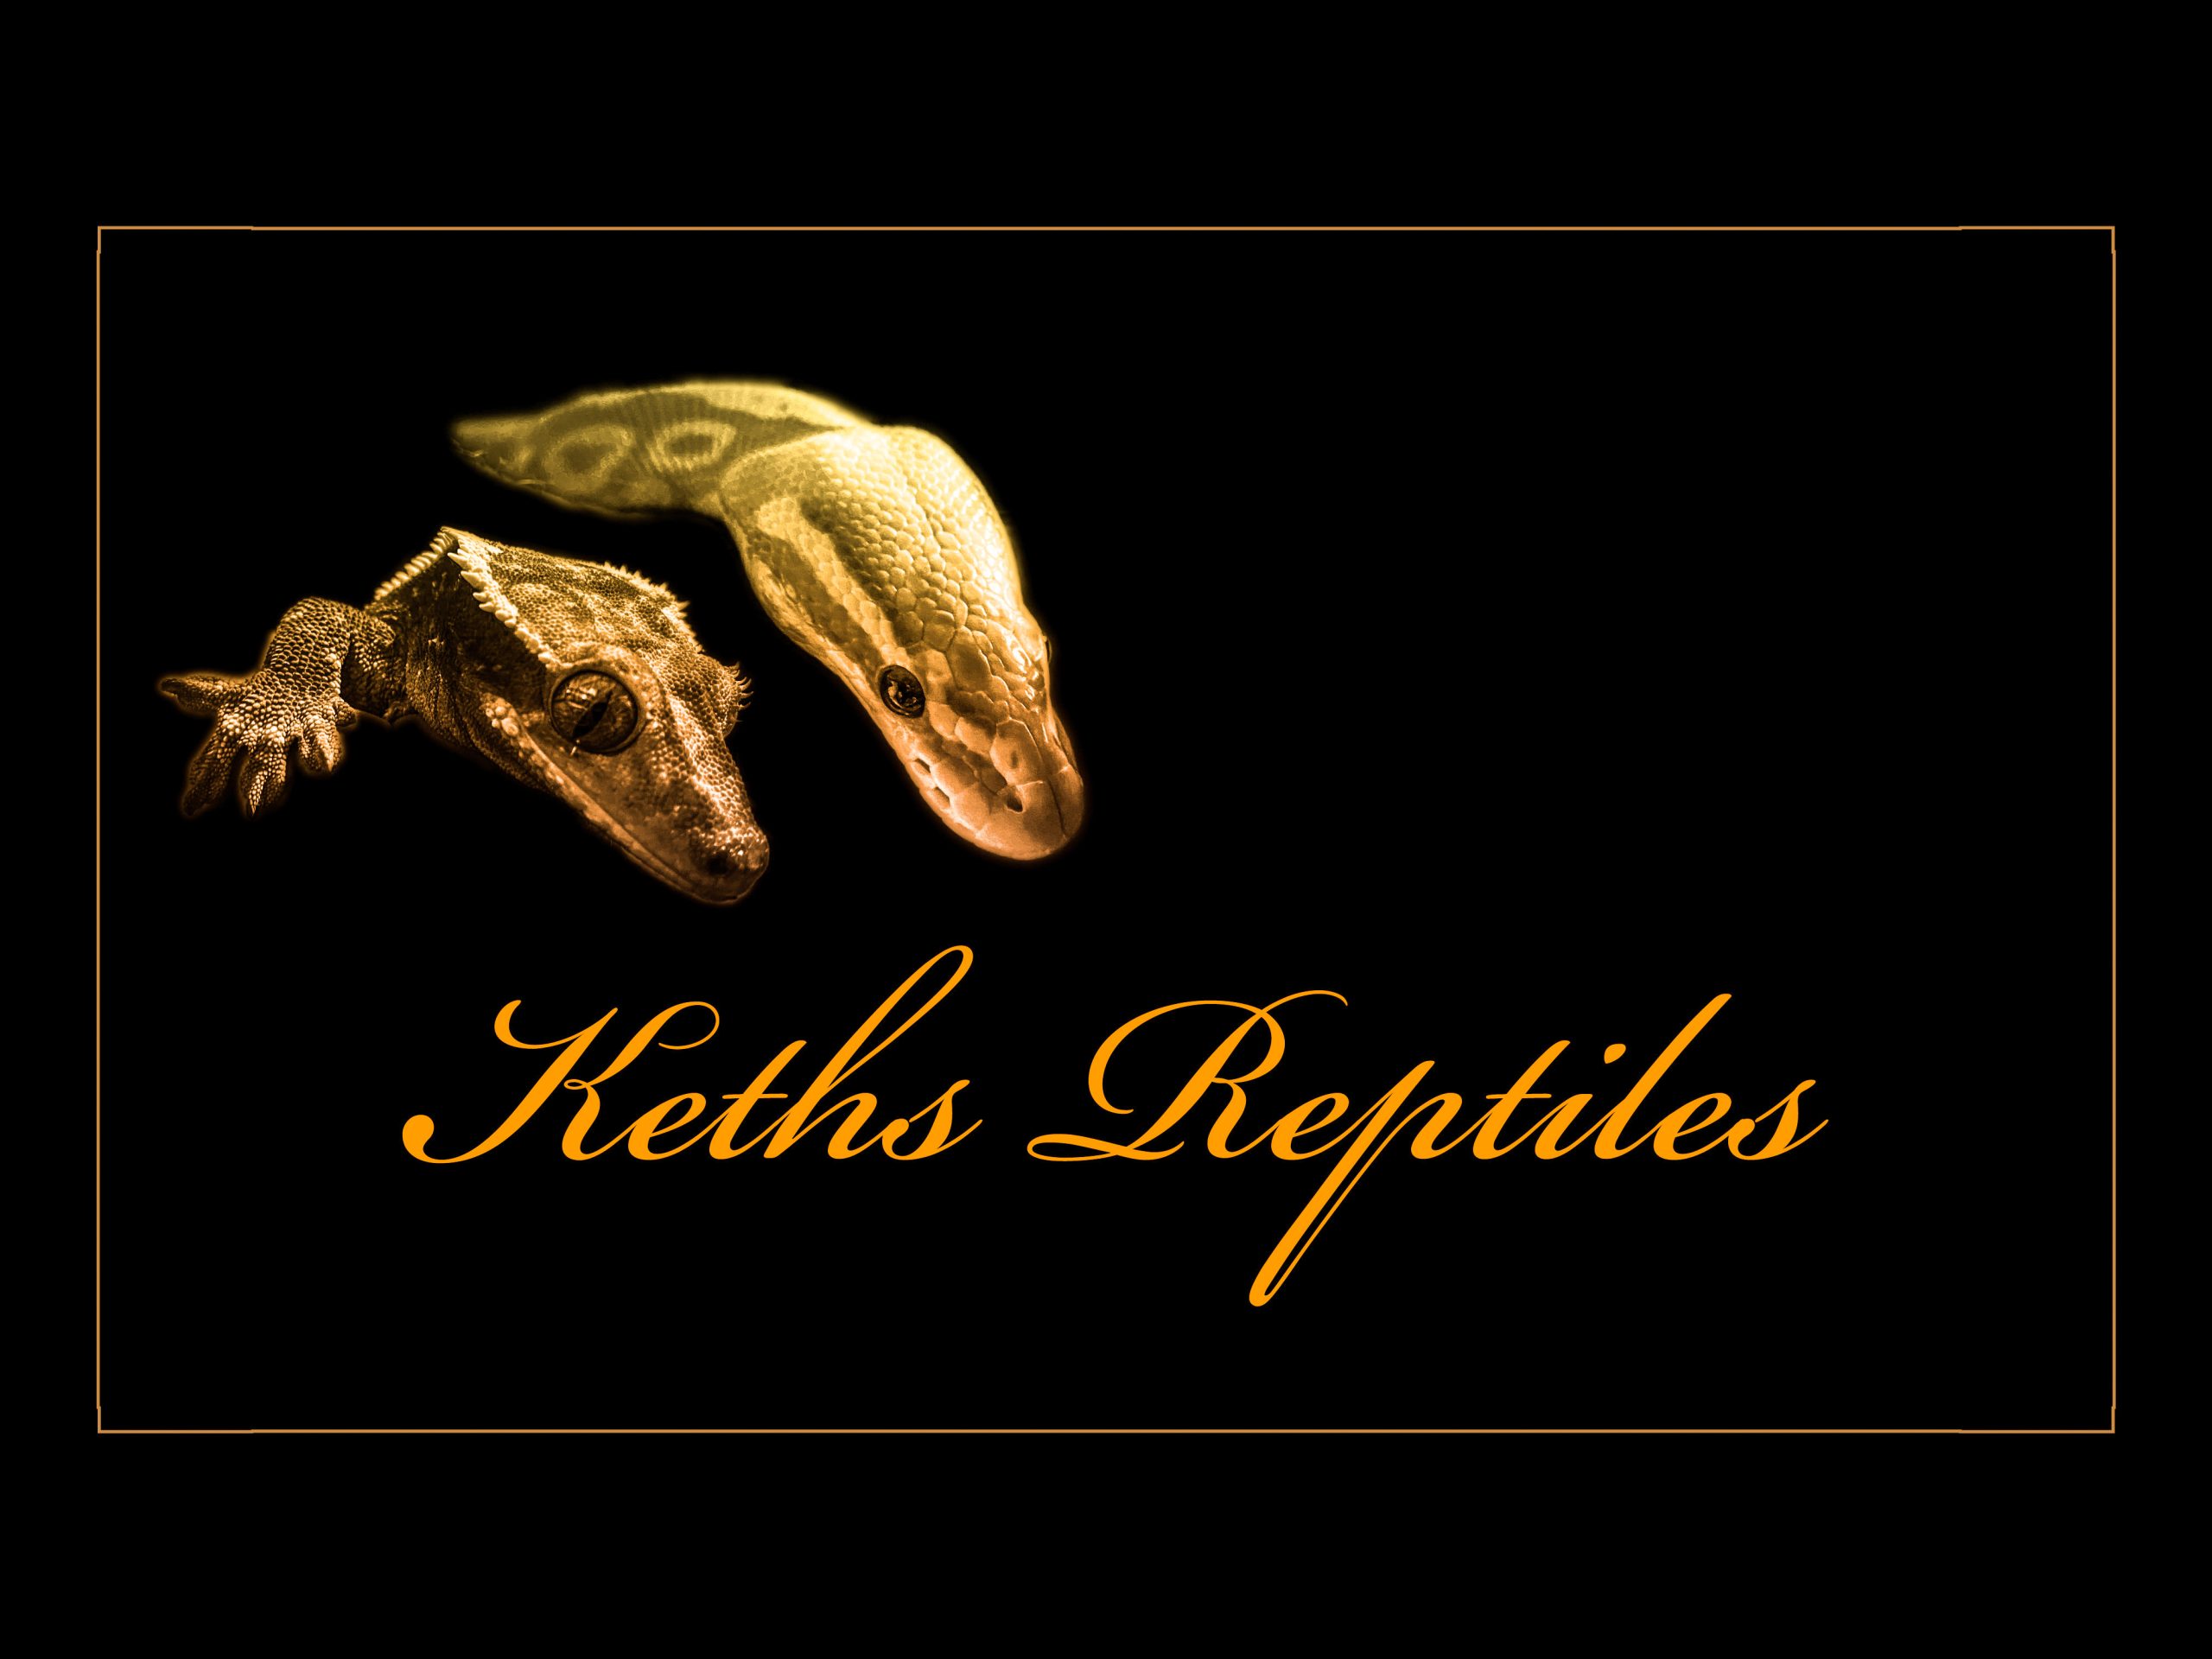 Keths Reptiles